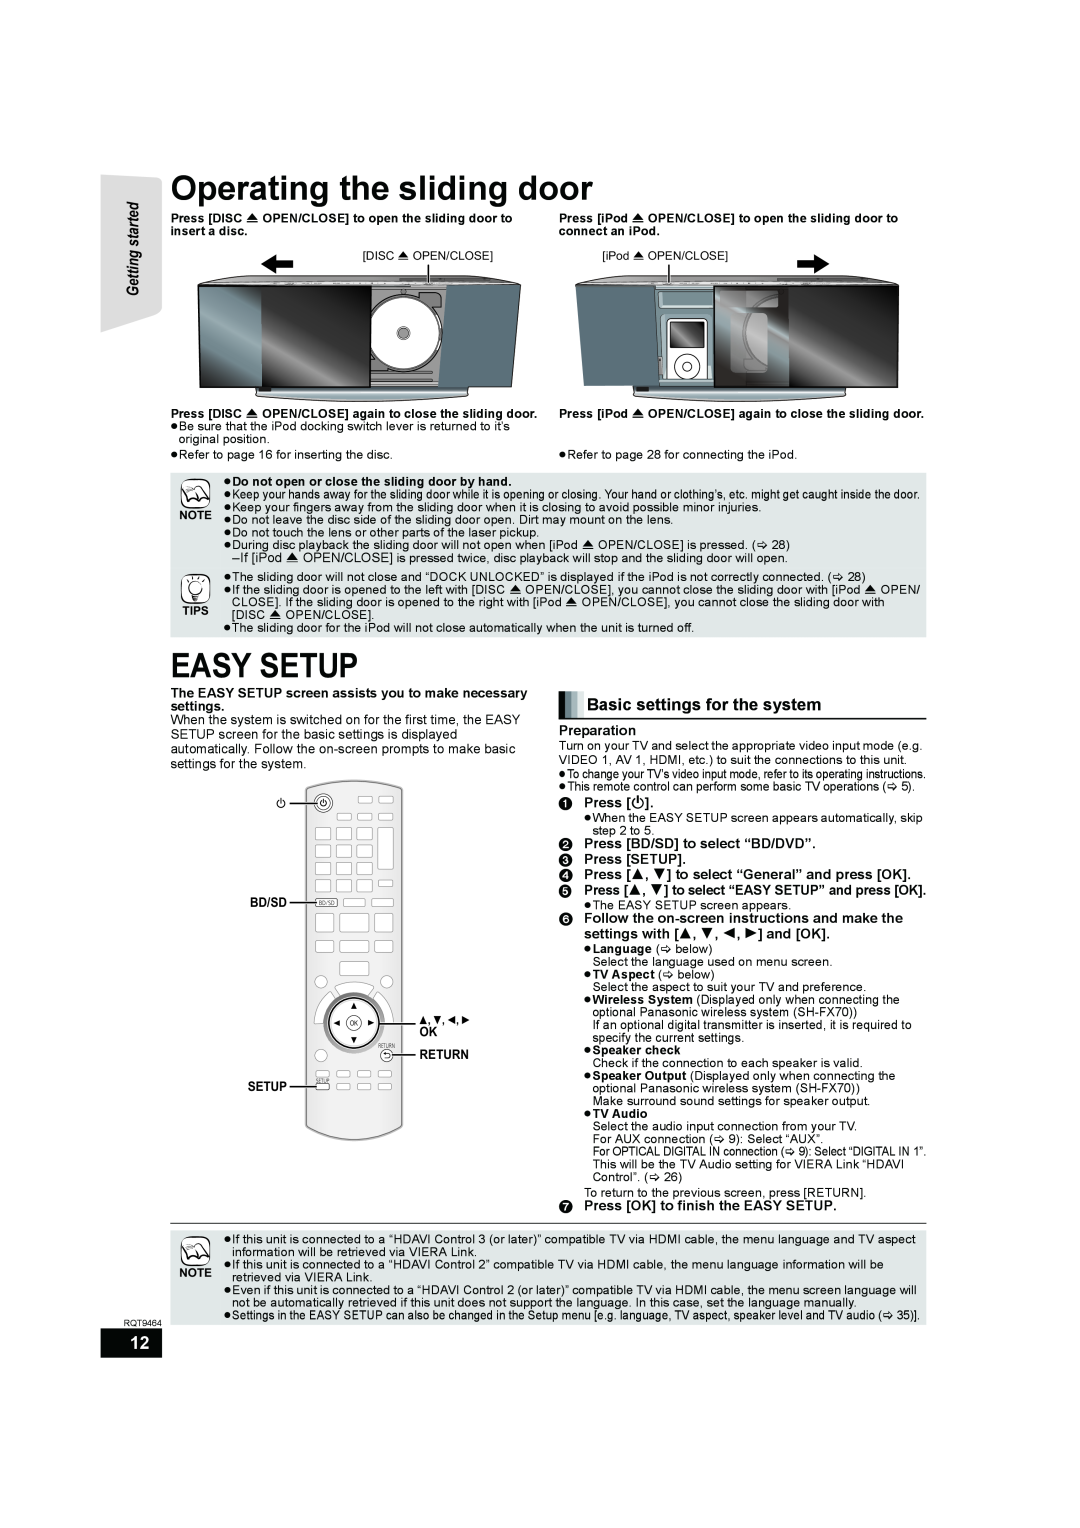 Panasonic SC-BTX70 manual Operating the sliding door, Easy Setup, Basic settings for the system, Getting started 